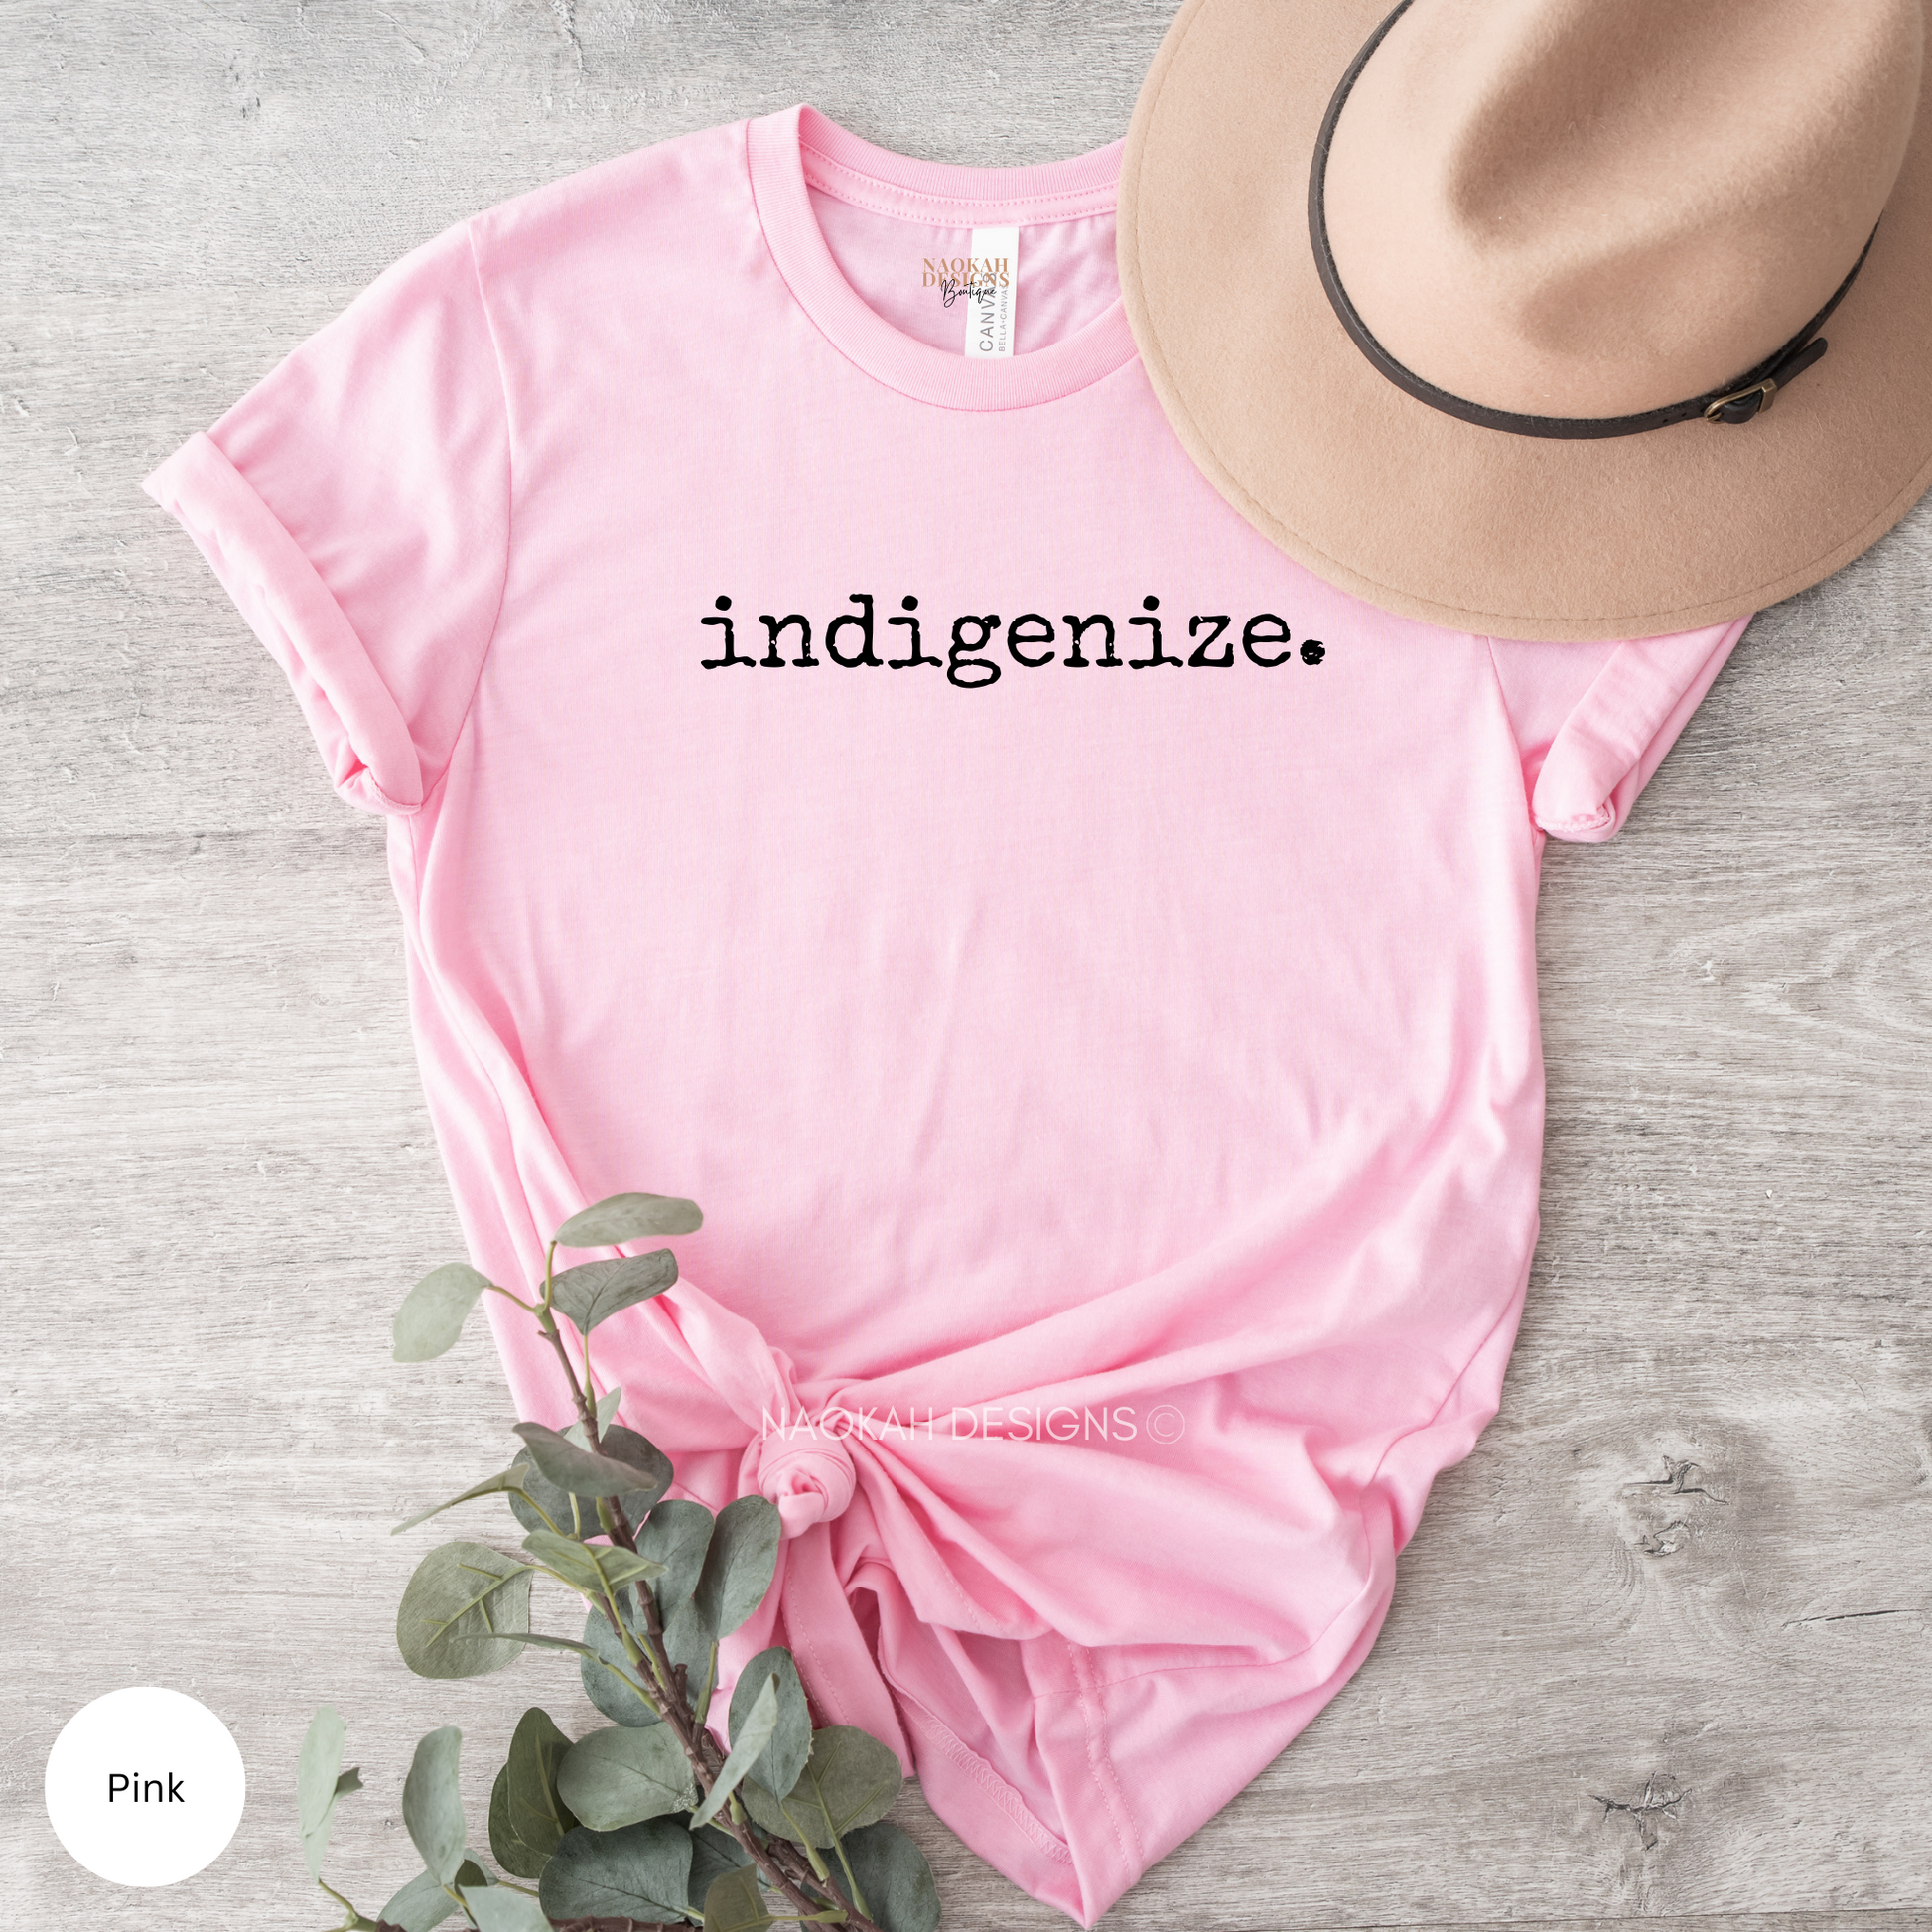 Indigenize Shirt, Indigenous Shirt, Native Shirt, Decolonize Your Mind Shirt, Dismantle Shirt, Indigenous Resilience Shirt